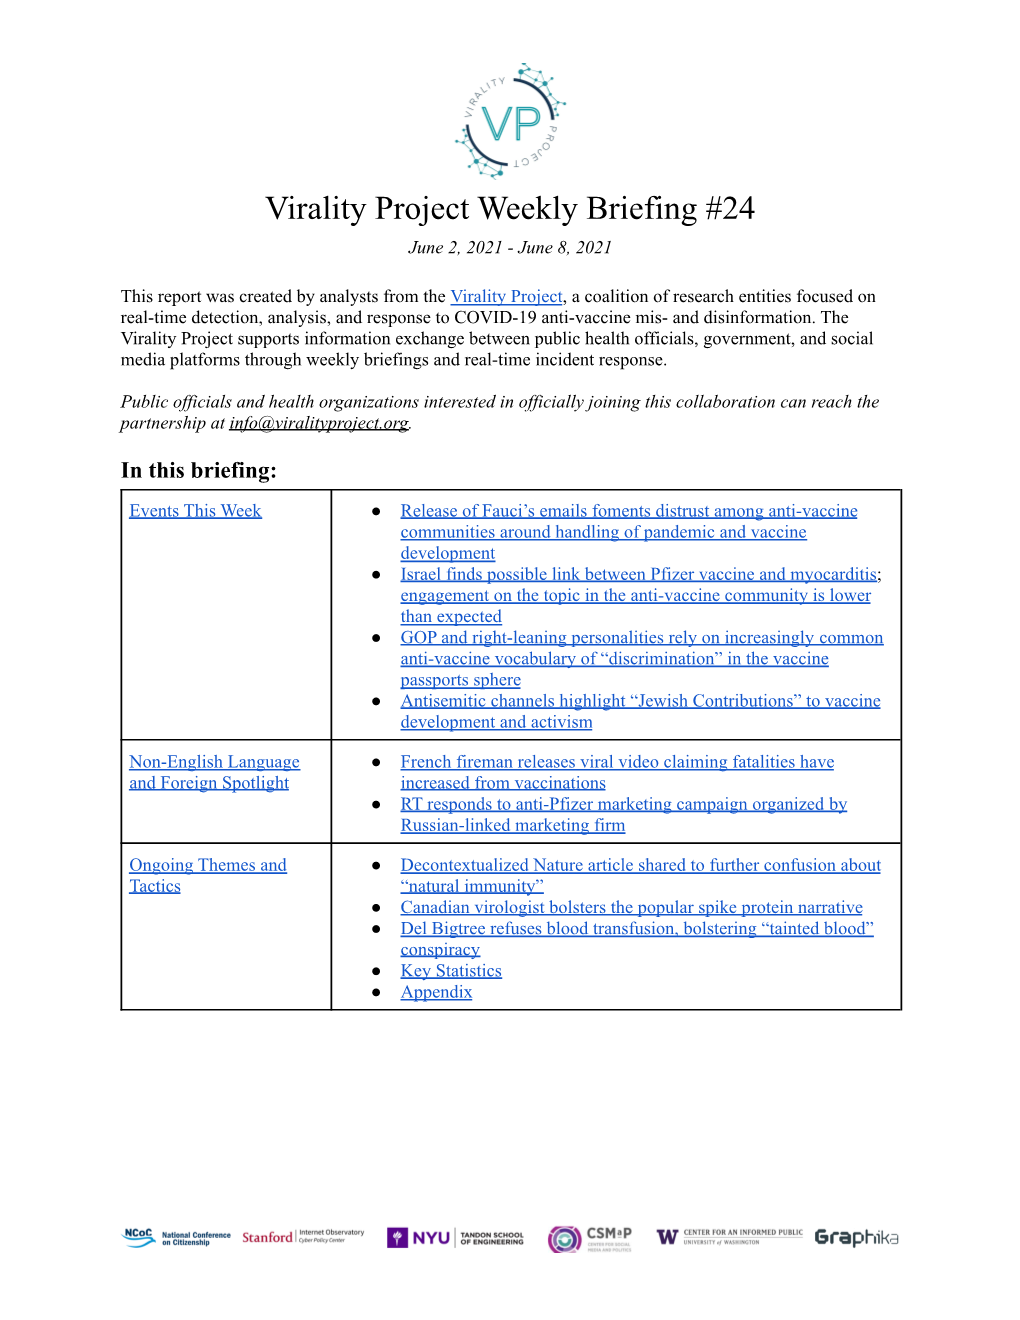 Virality Project Weekly Briefing #24 June 2, 2021 - June 8, 2021